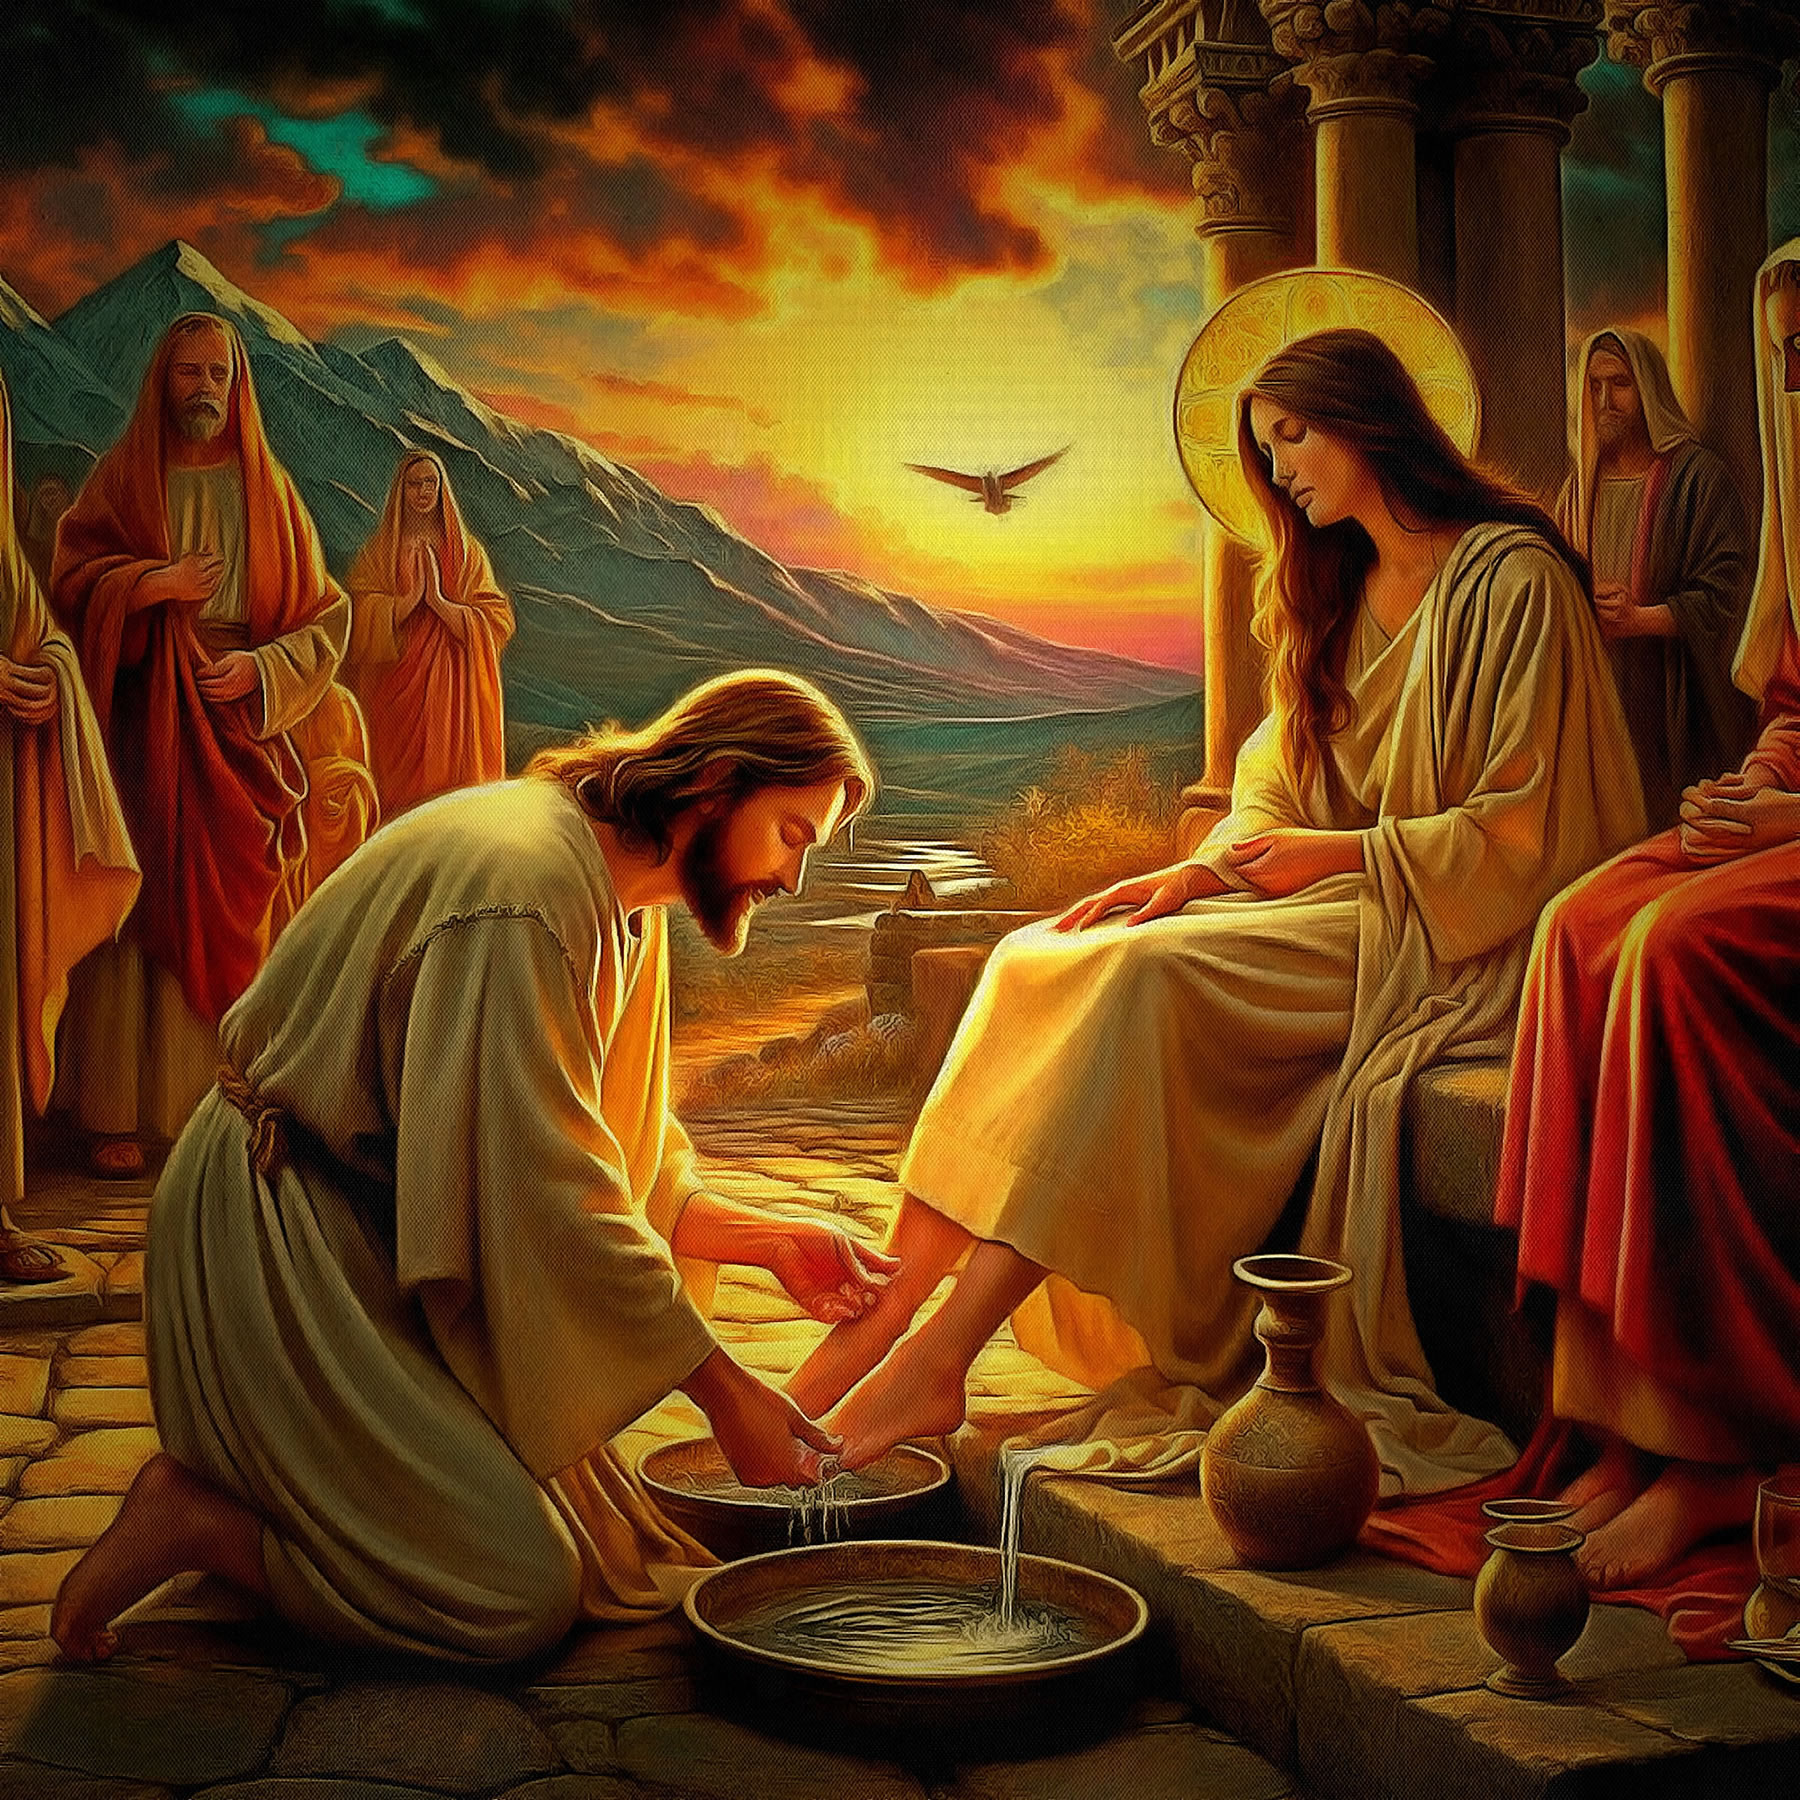 Imaginary Bible Scene with Jesus washing Mary Magdalene's feet